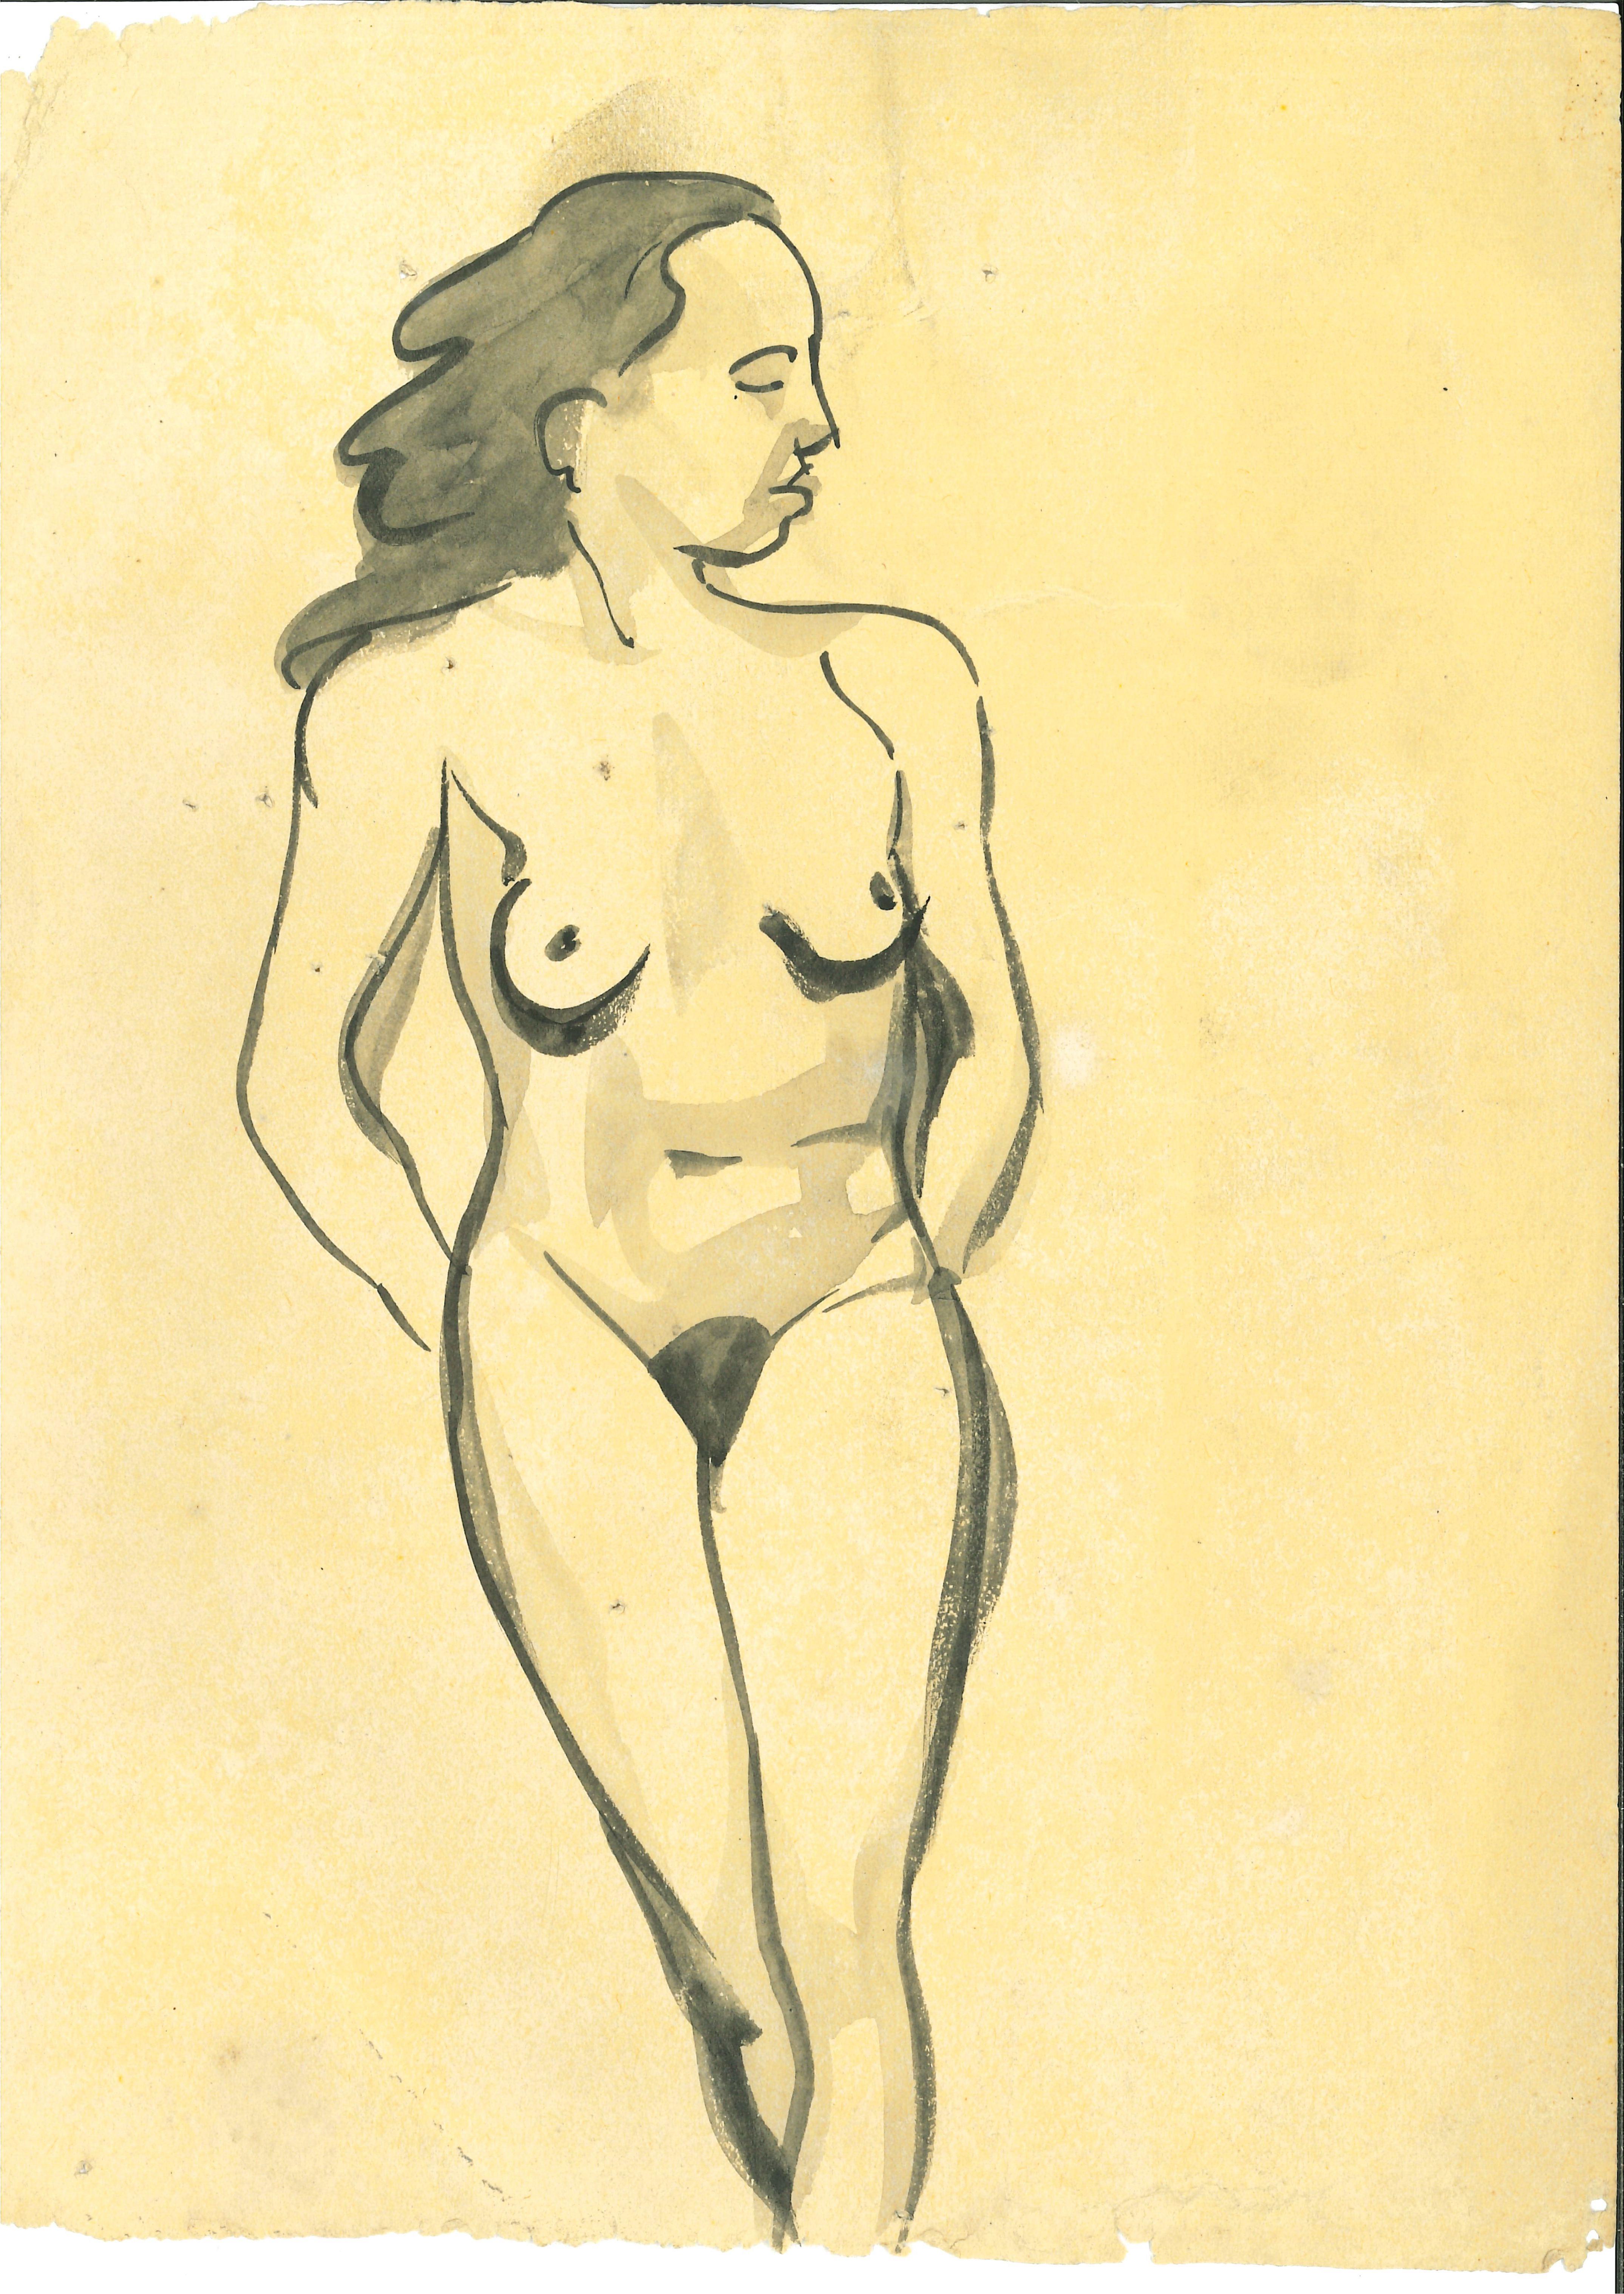 Nude Woman - Original Pen and Watercolor by André MeauxSaint-Marc - 1900